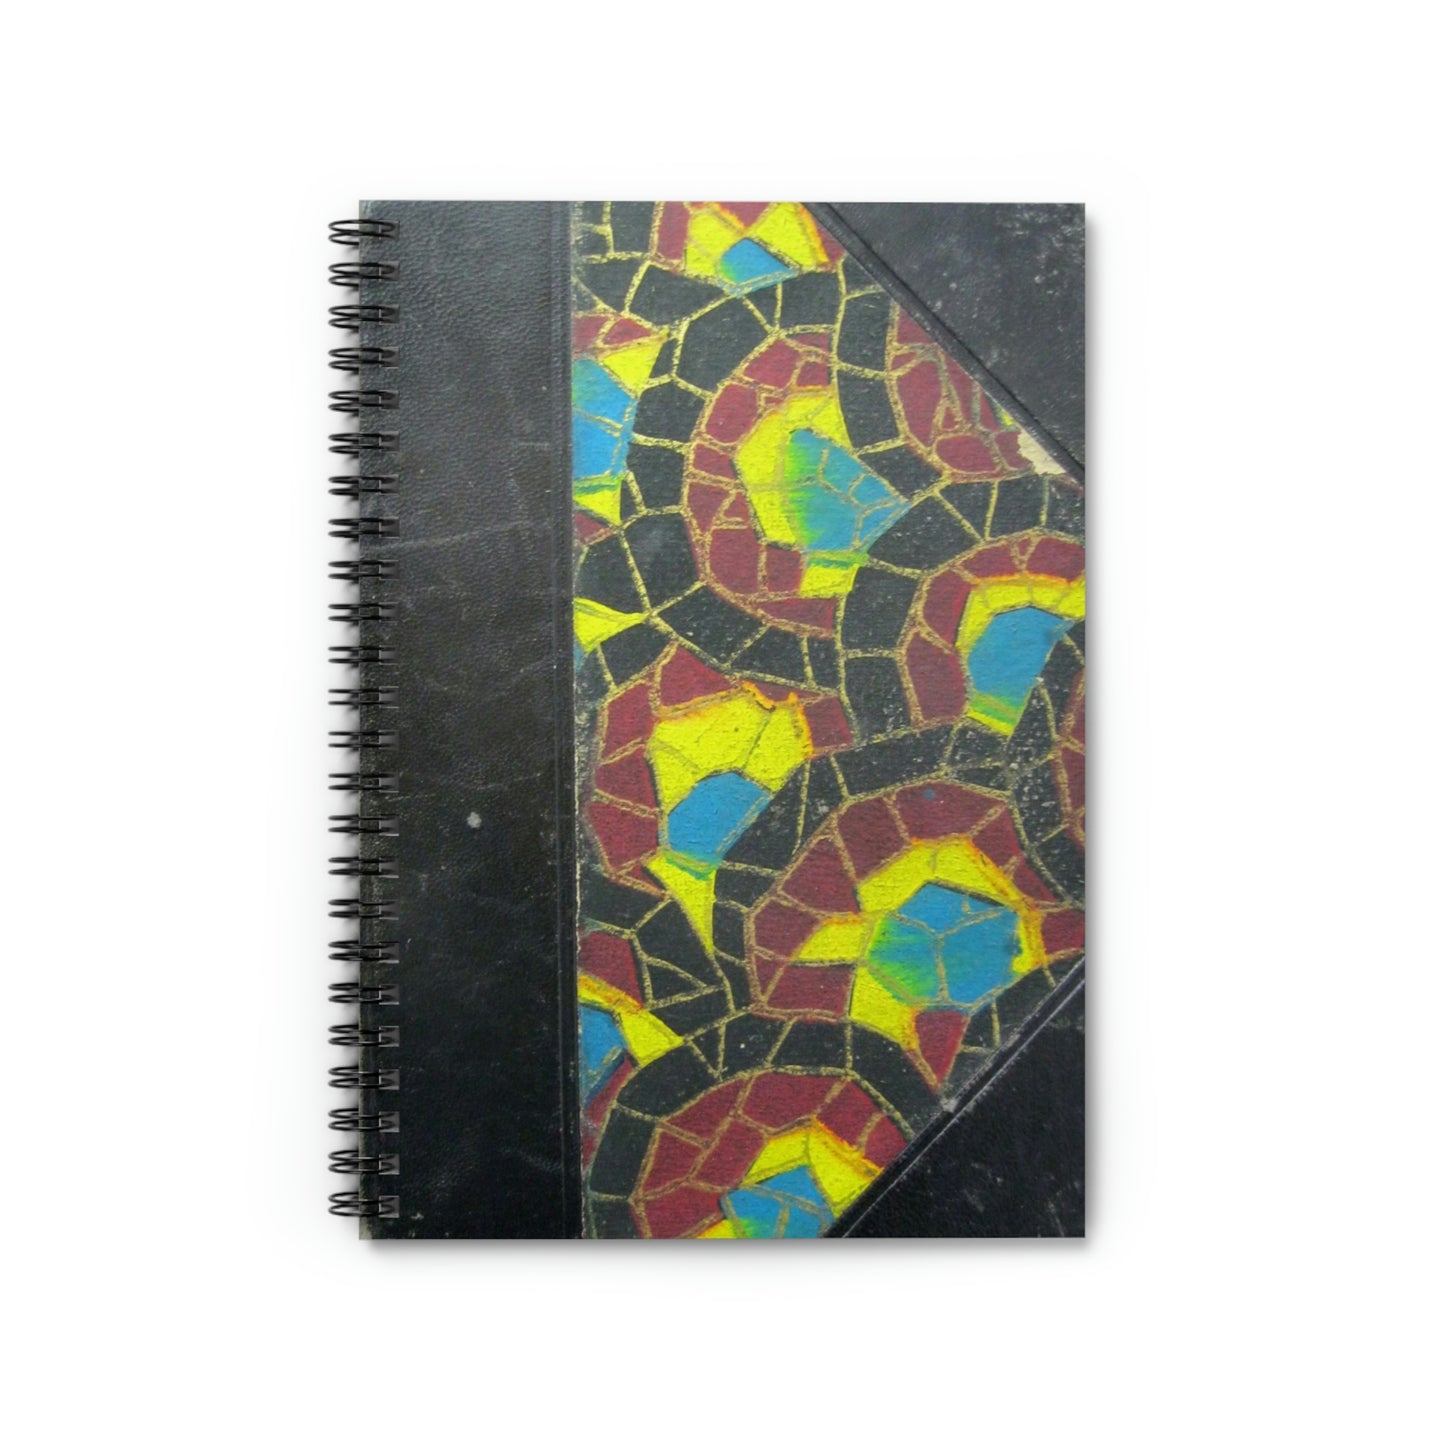 Spiral Notebook Vintage Decorative Book Cover Image - Ruled Line